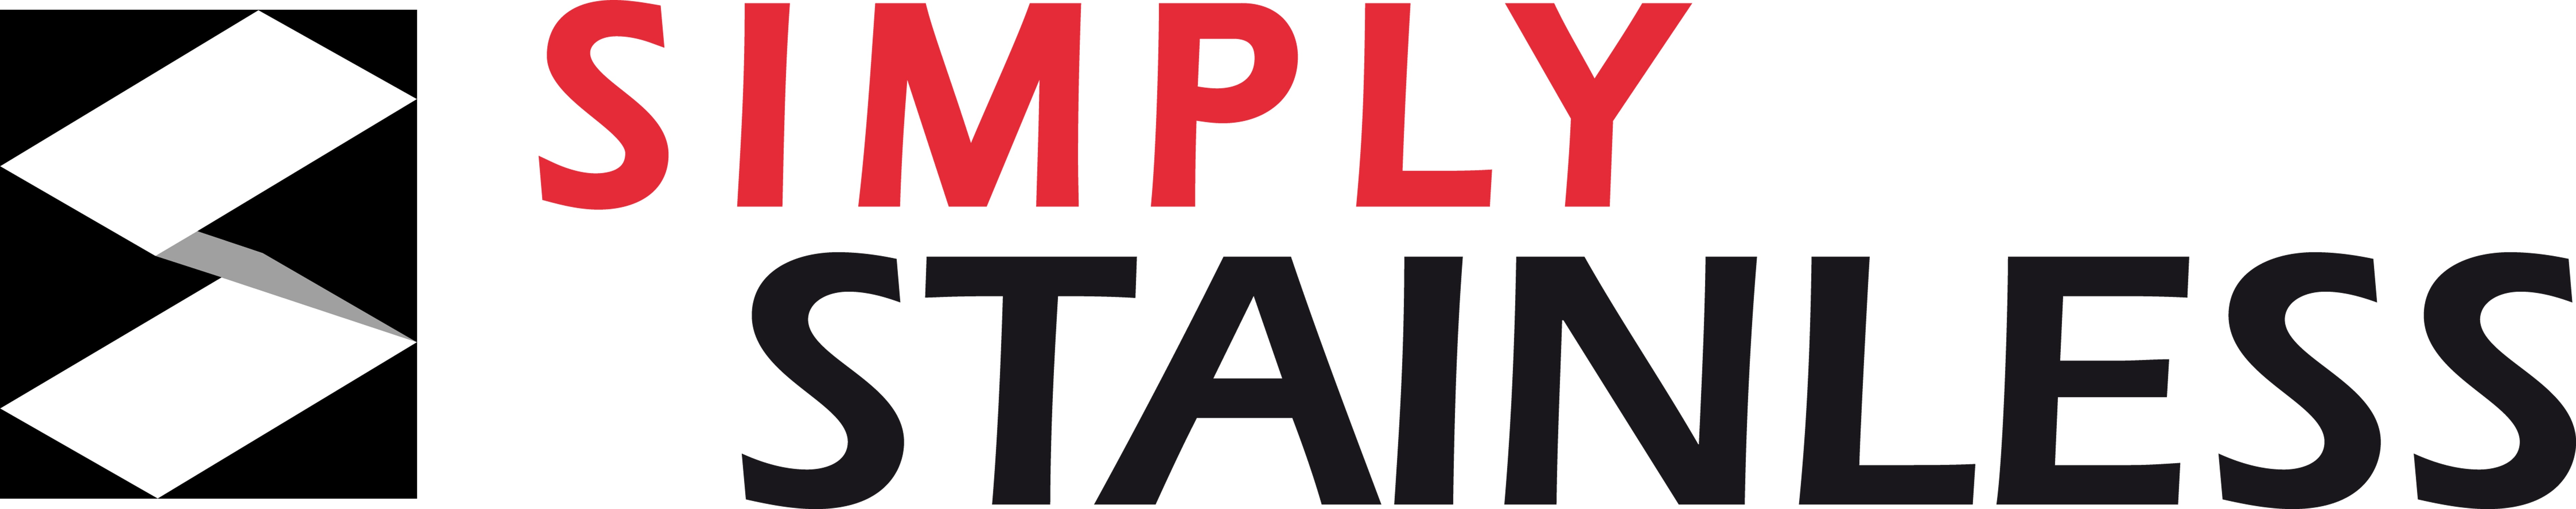 Simply Stainless Logo 600dpi